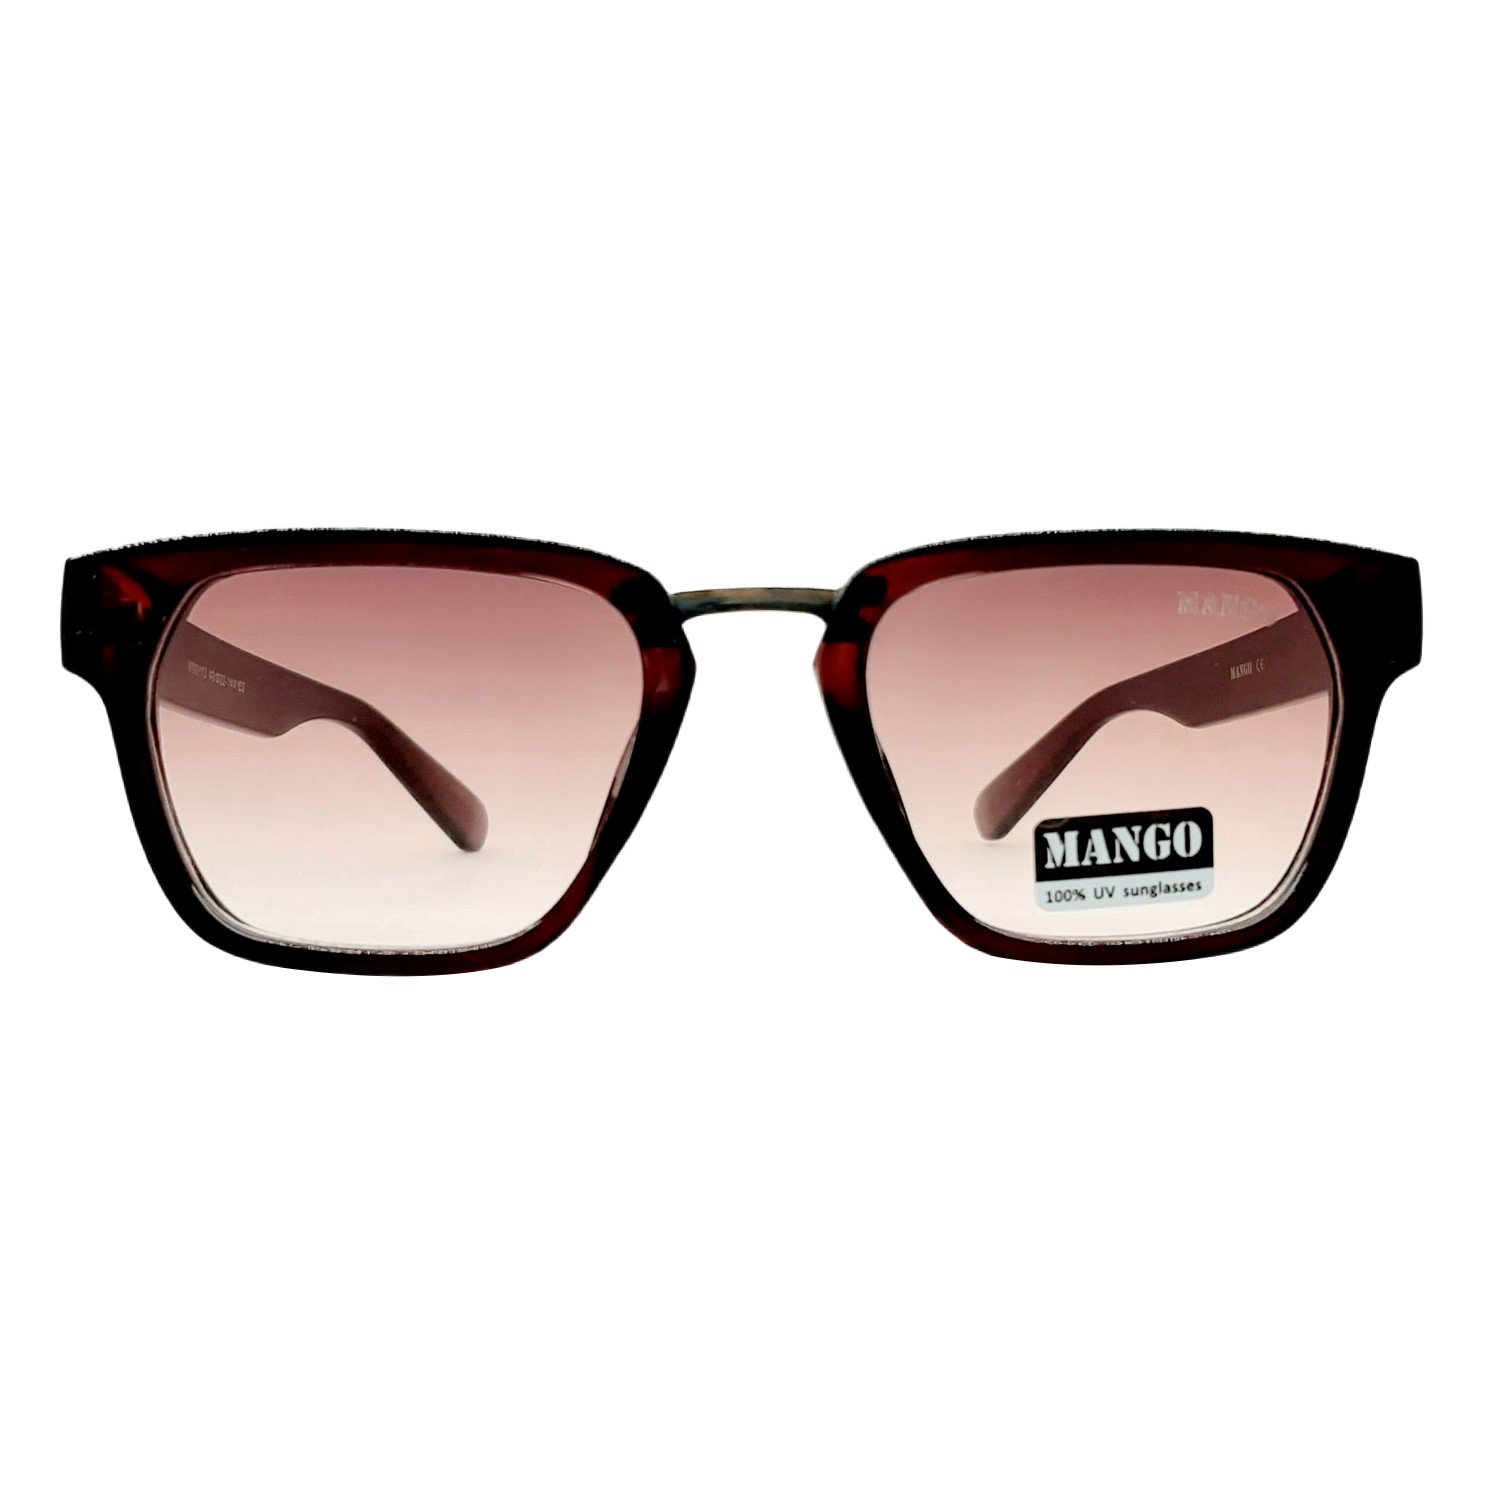 عینک آفتابی مانگو مدل W90113c2